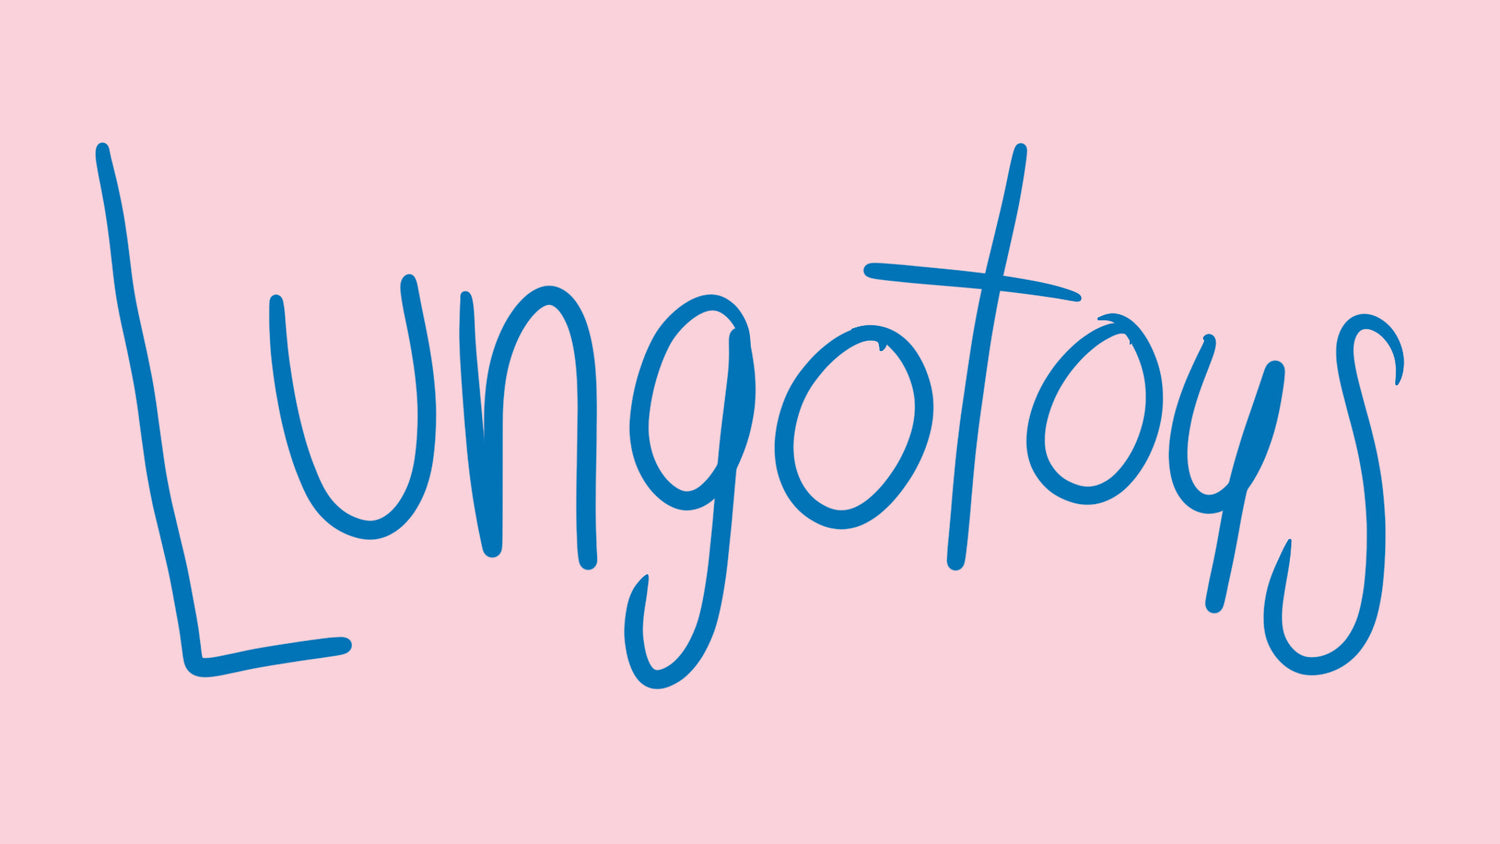 LungoToys